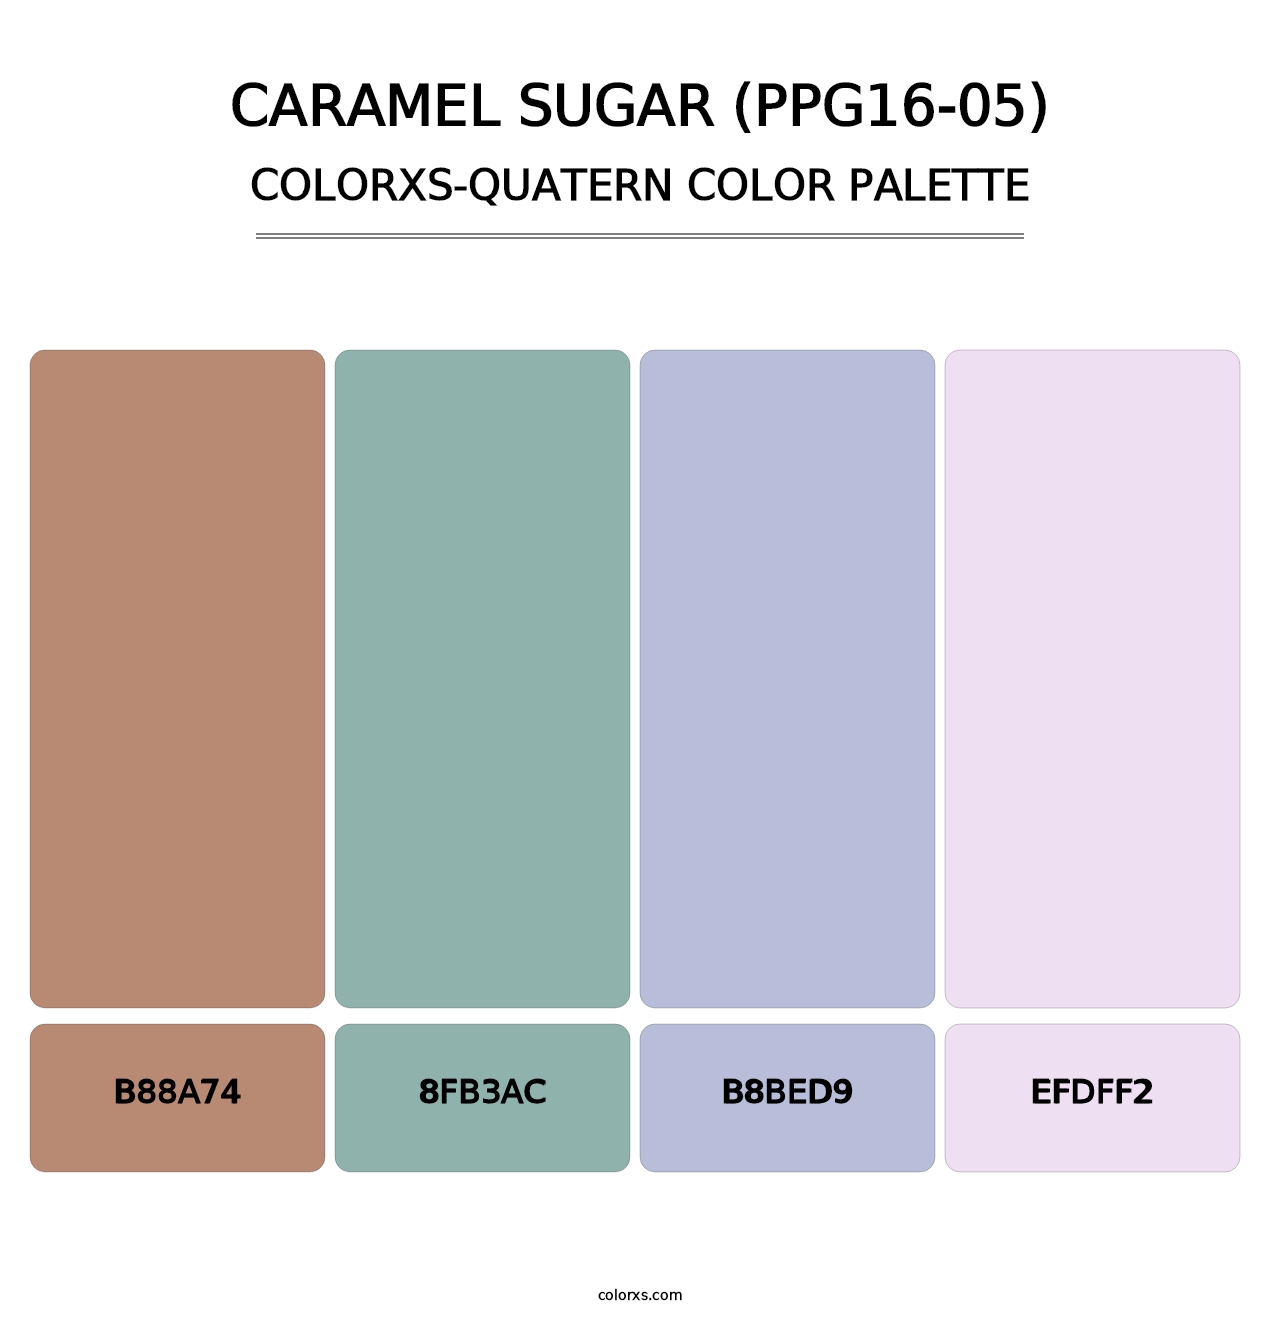 Caramel Sugar (PPG16-05) - Colorxs Quatern Palette